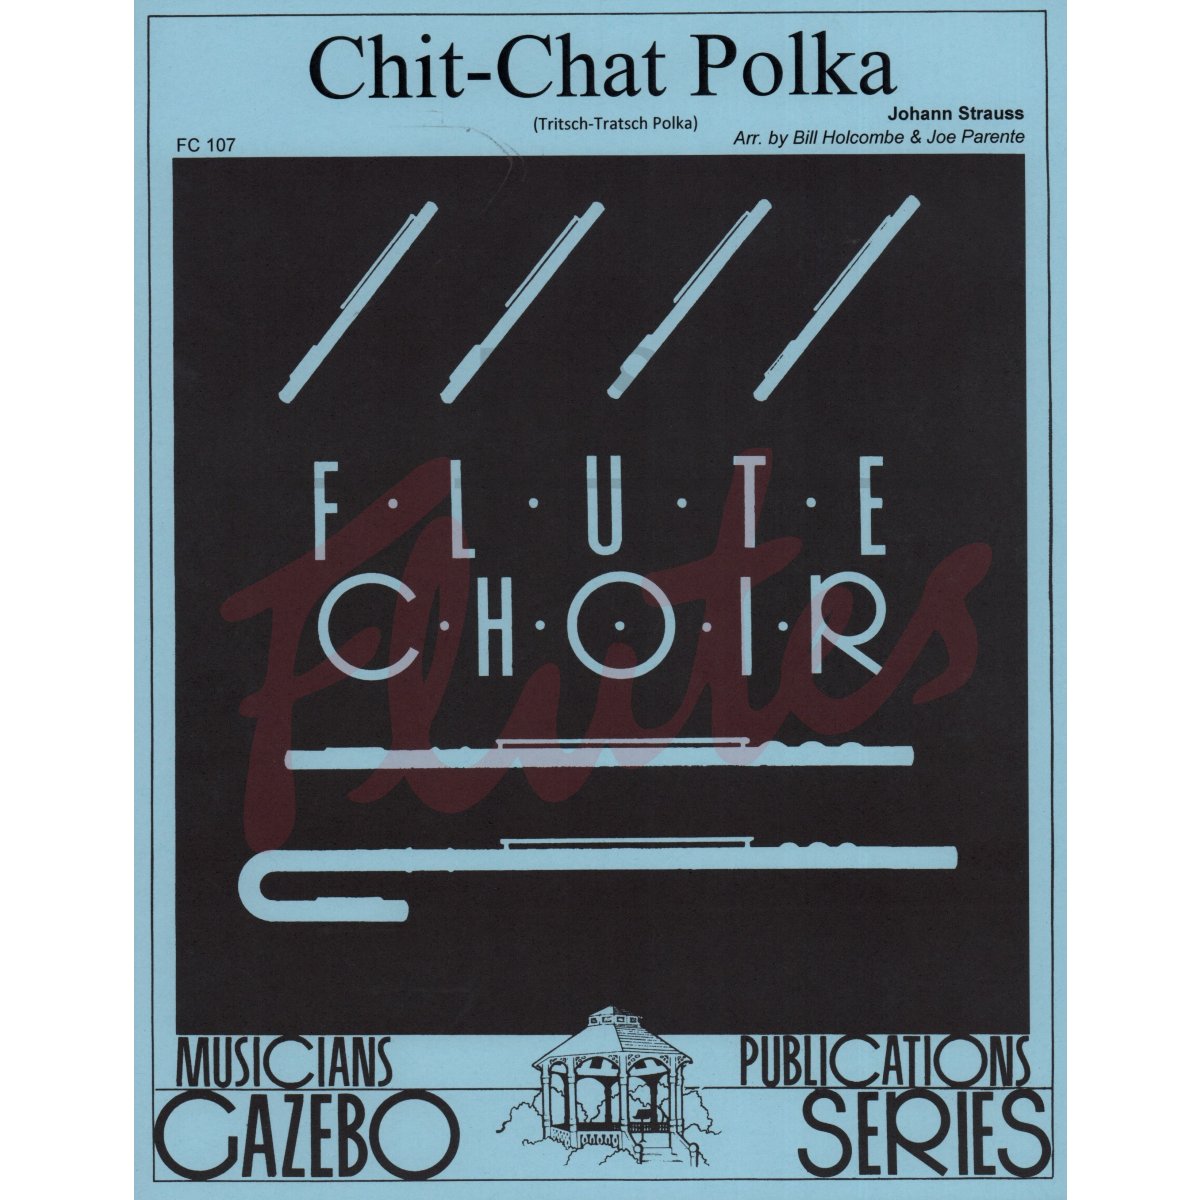 Chit-Chat Polka (Tritsch-Tratsch Polka) for Flute Choir